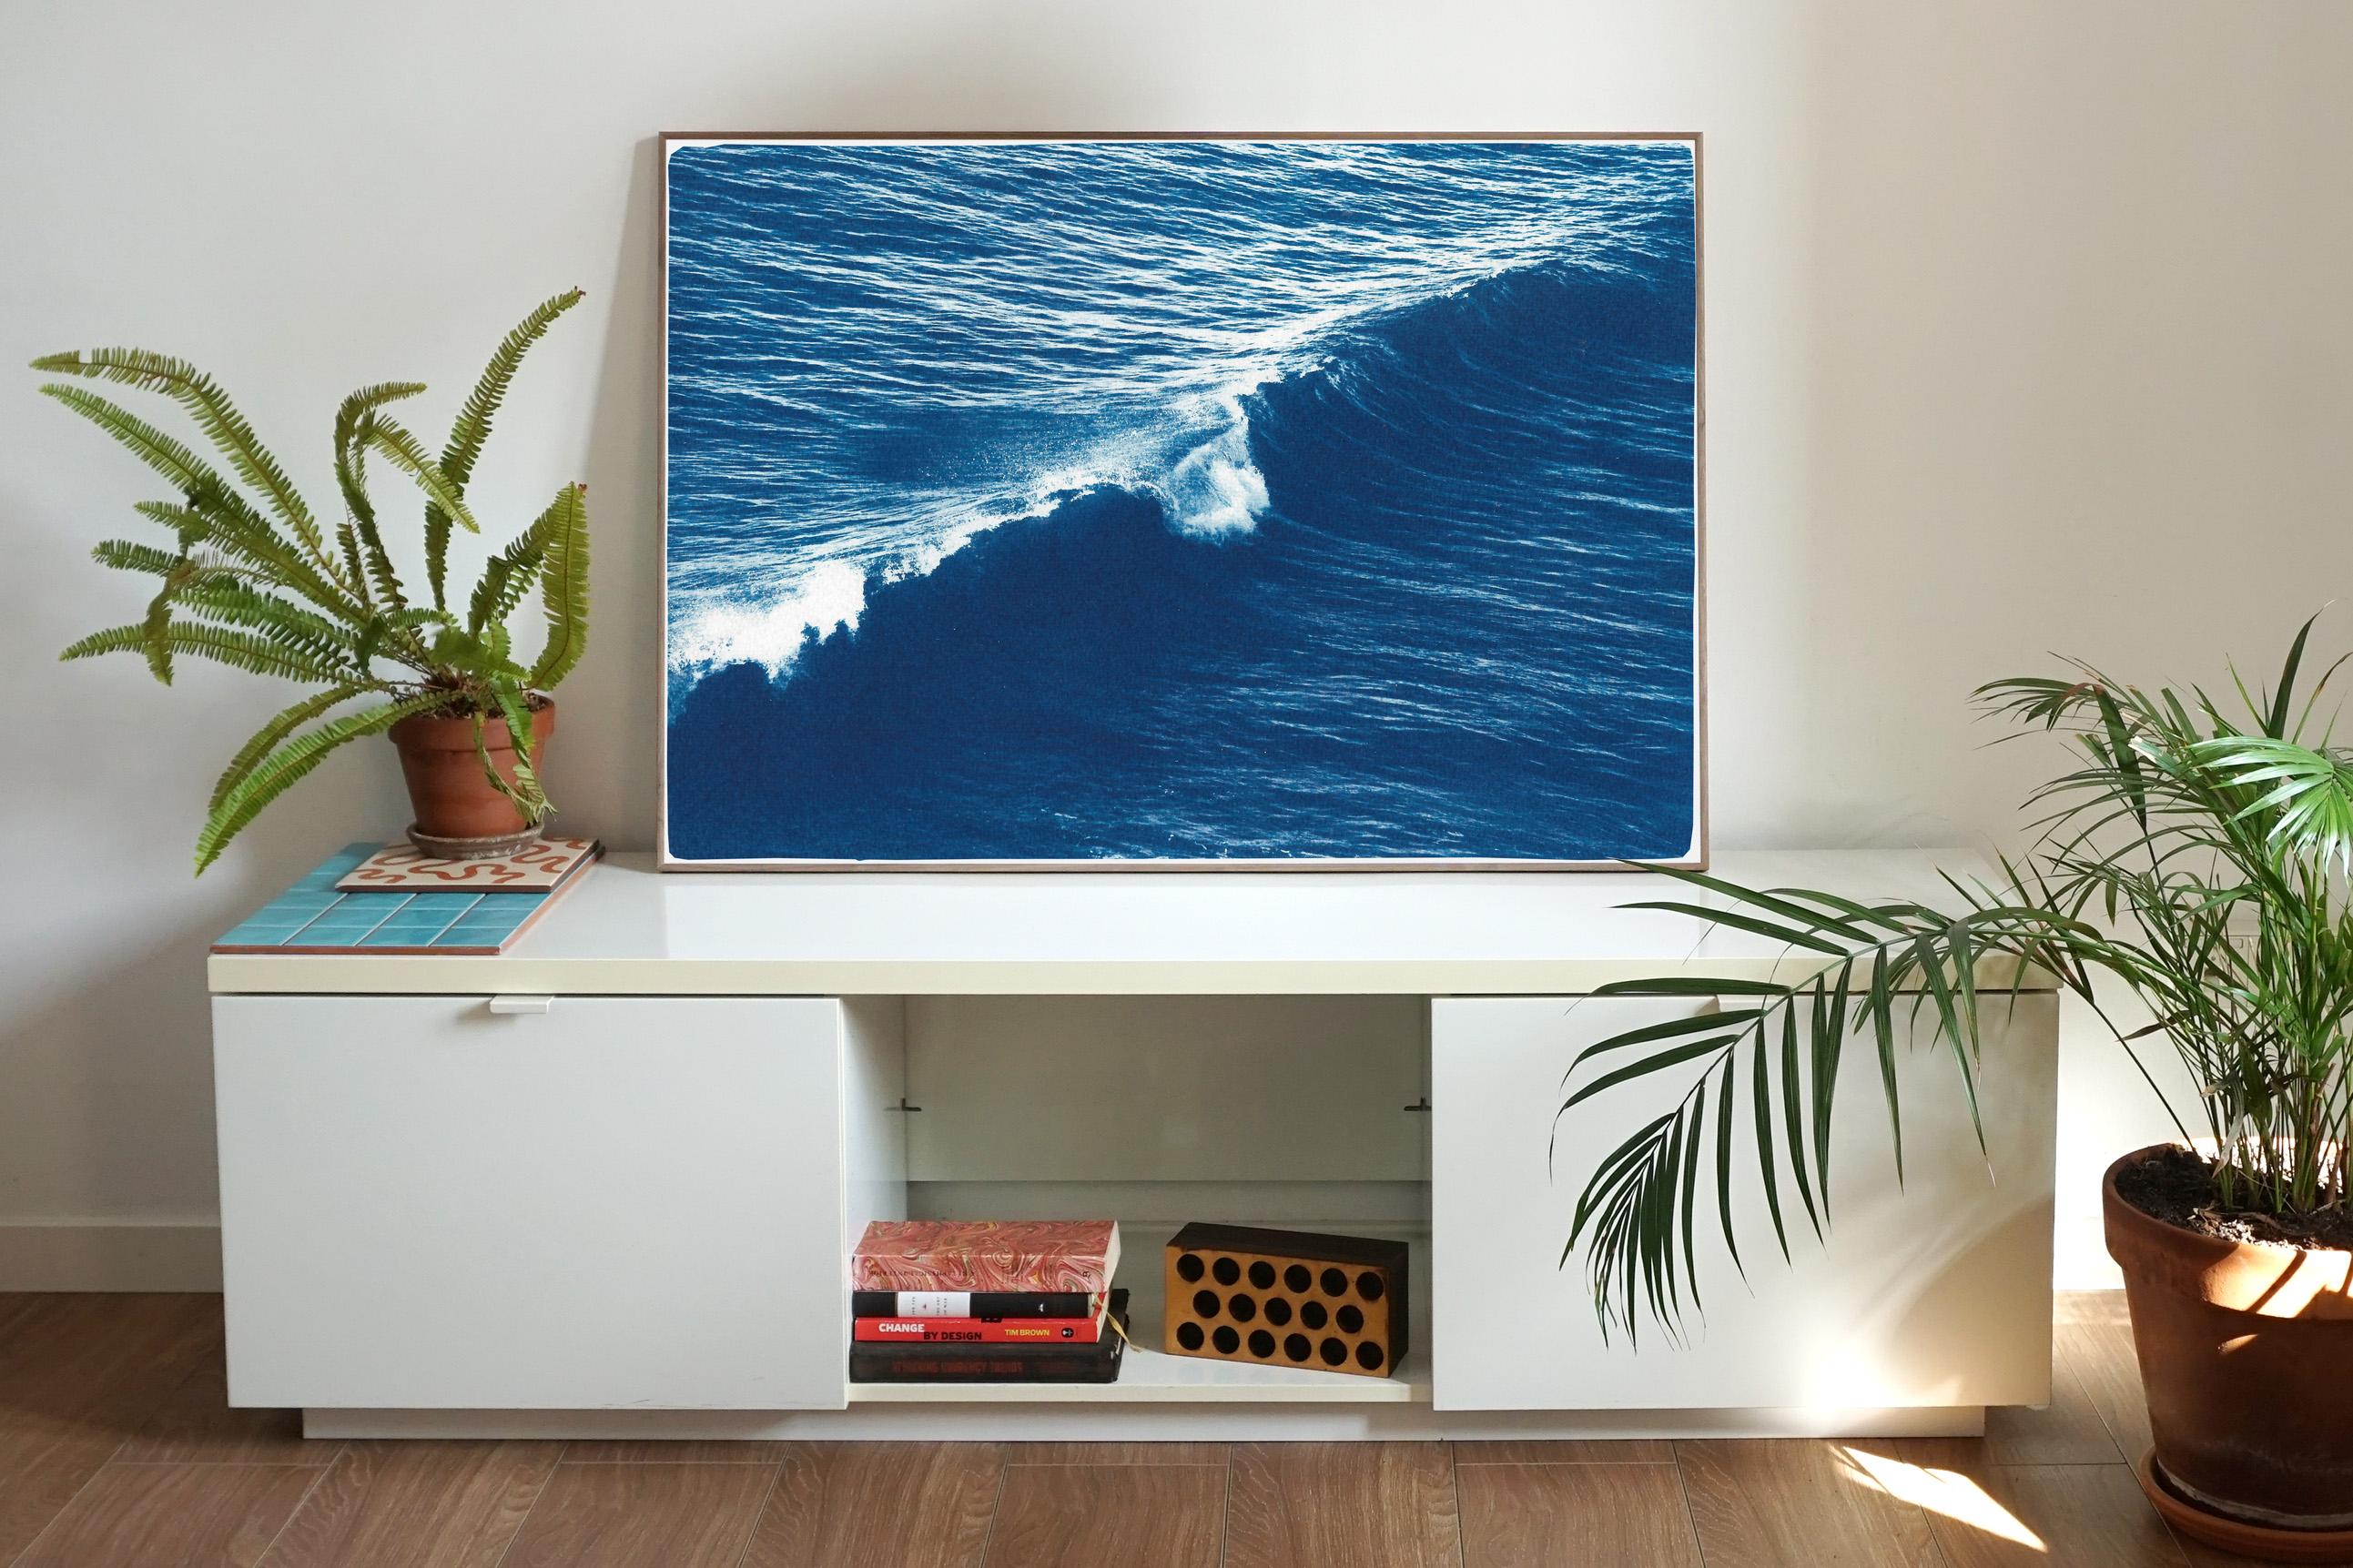 Venice Beach Seascape, Long Wave, Nautical Scene in Blue Tones, Limited Edition 2